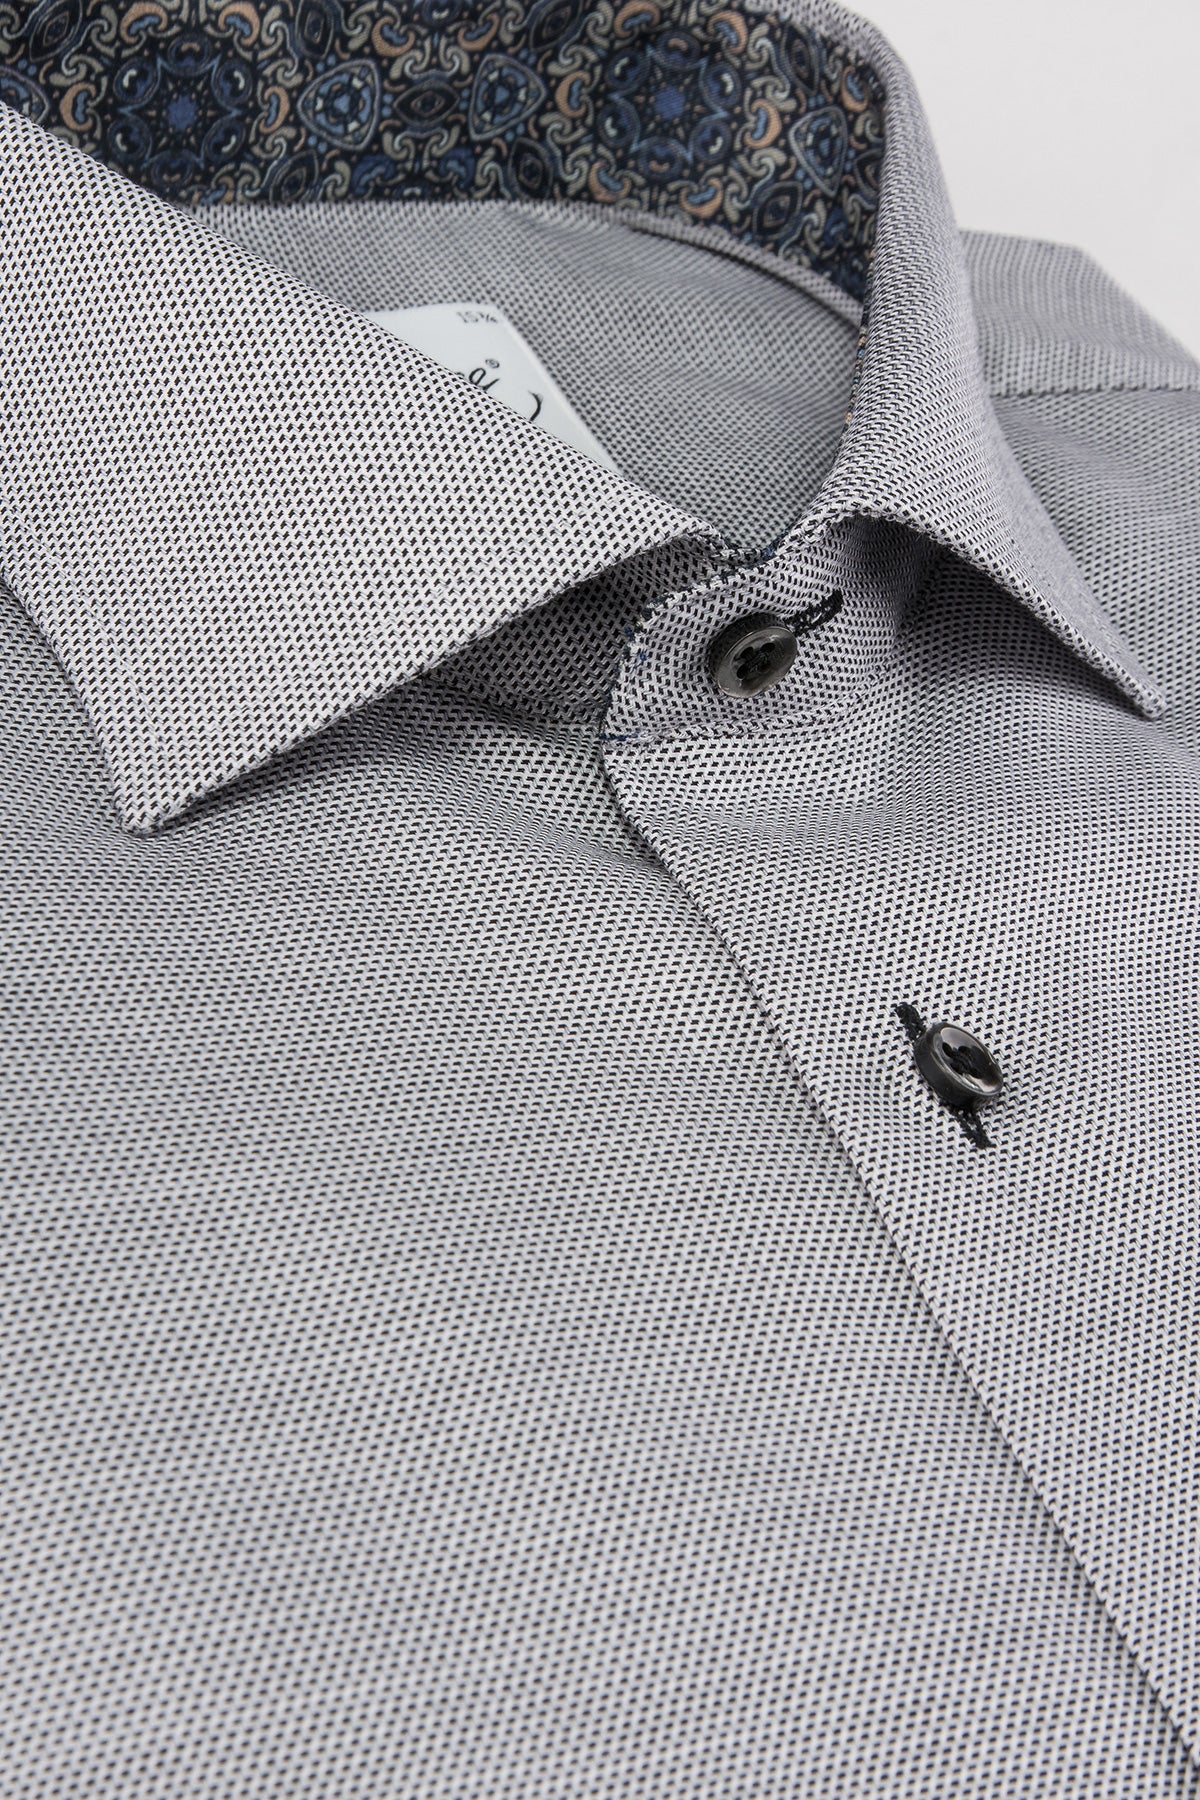 Grey regular fit shirt with contrast details